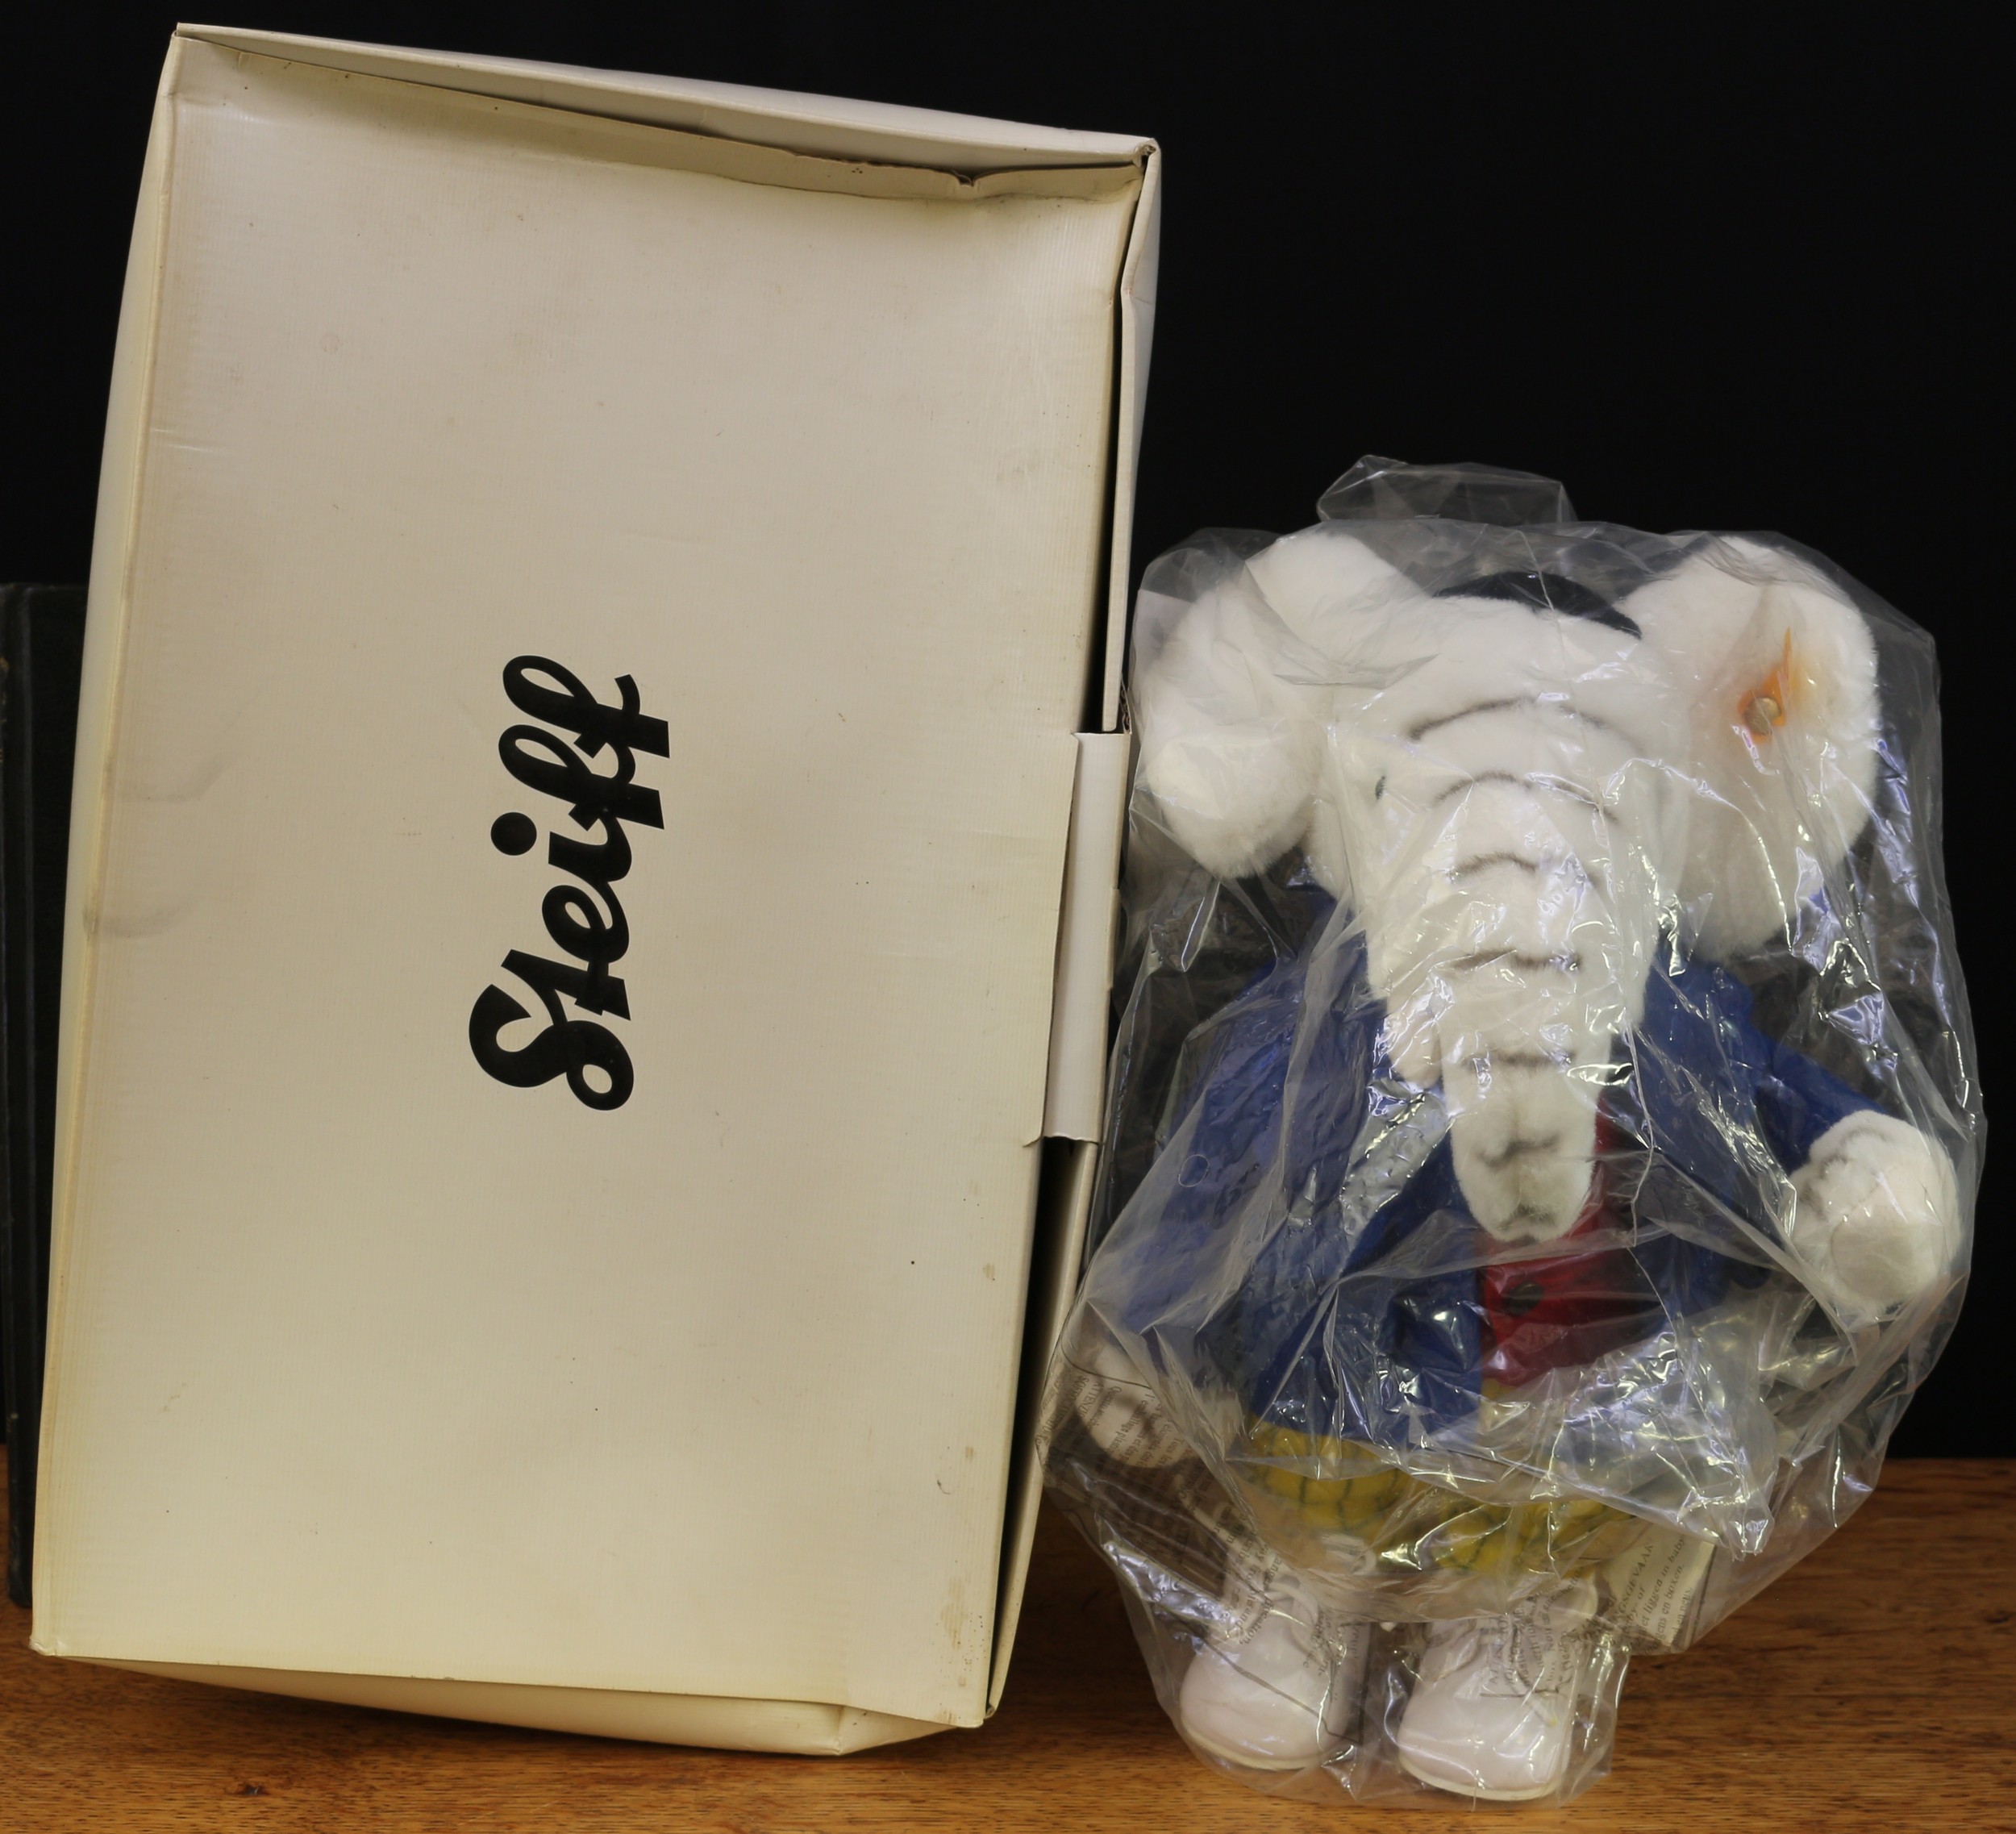 Steiff (Germany) EAN 653612 Edward Trunk Elephant from Rupert the Bear, trademark 'Steiff' button to